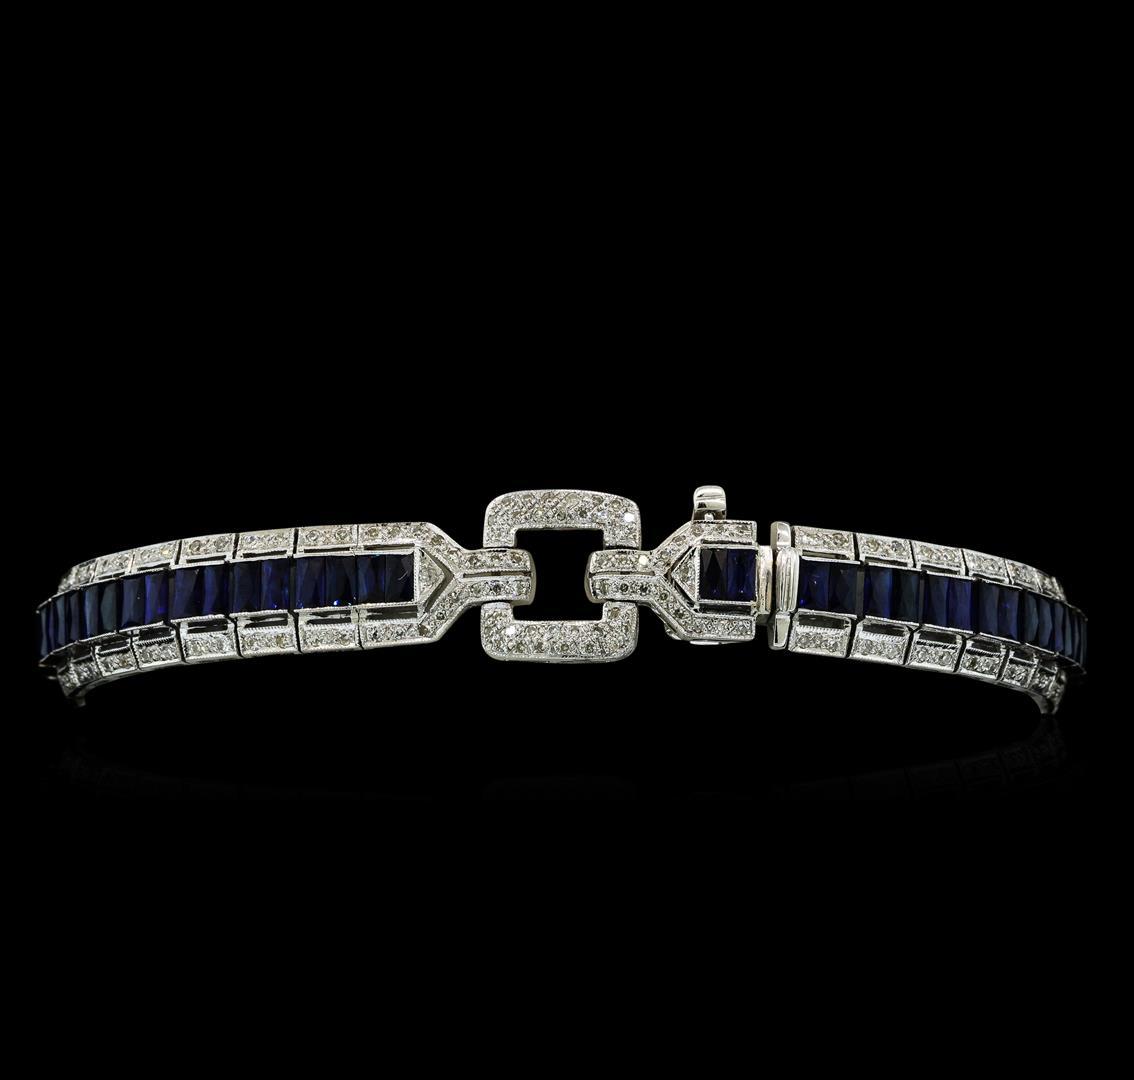 6.97 ctw Sapphire and Diamond Bracelet - 18KT White Gold